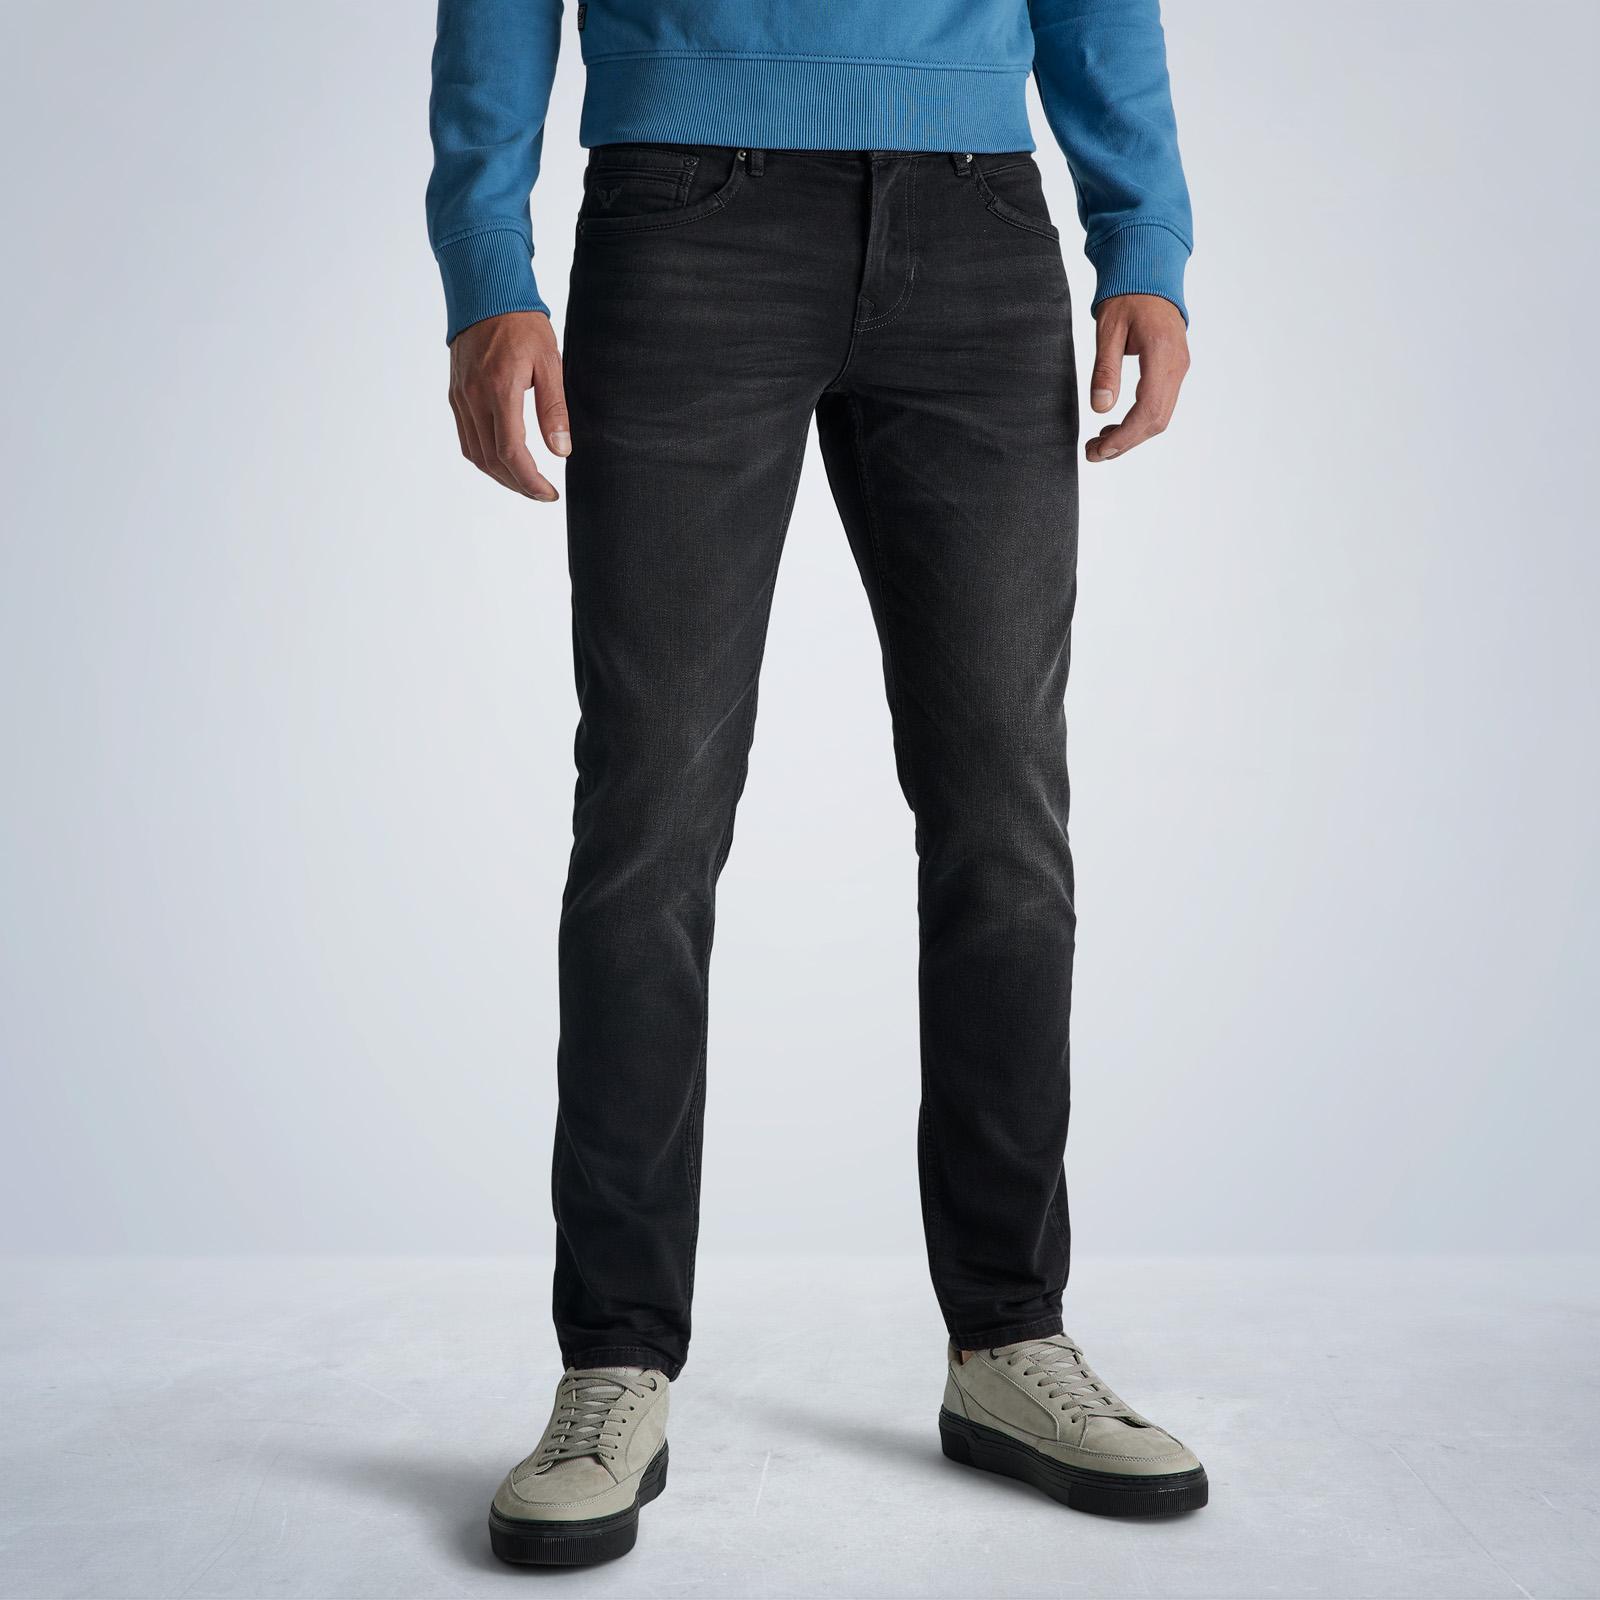 PME Legend Tailwheel Slim Fit Jeans product